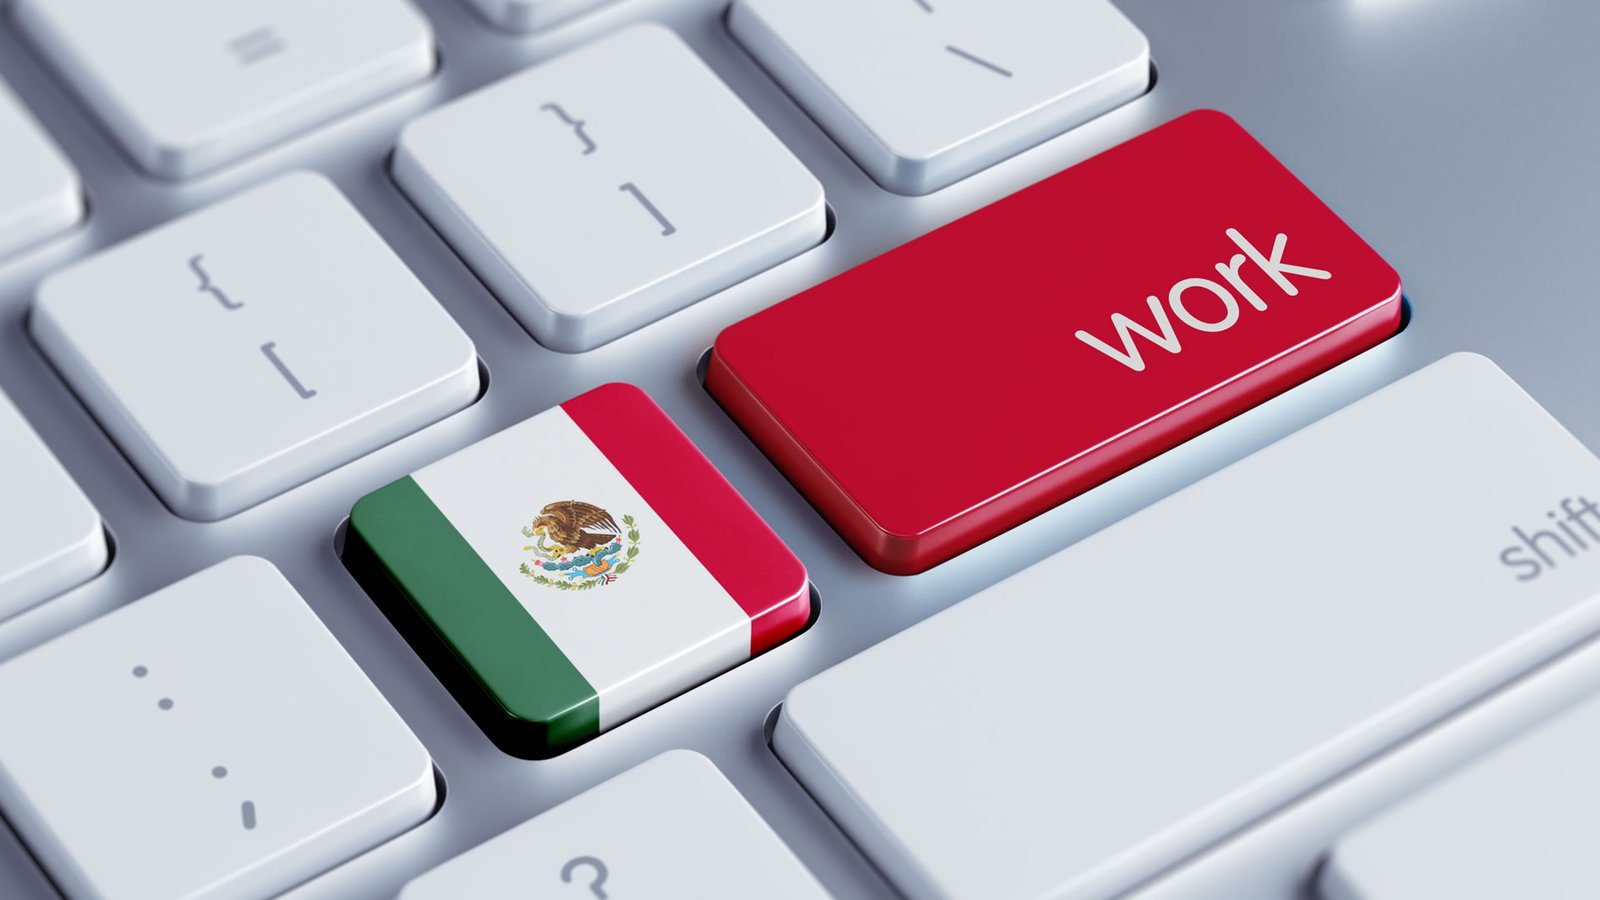 Diplomacia de México. Innovación y cultura, tendencias futuras.